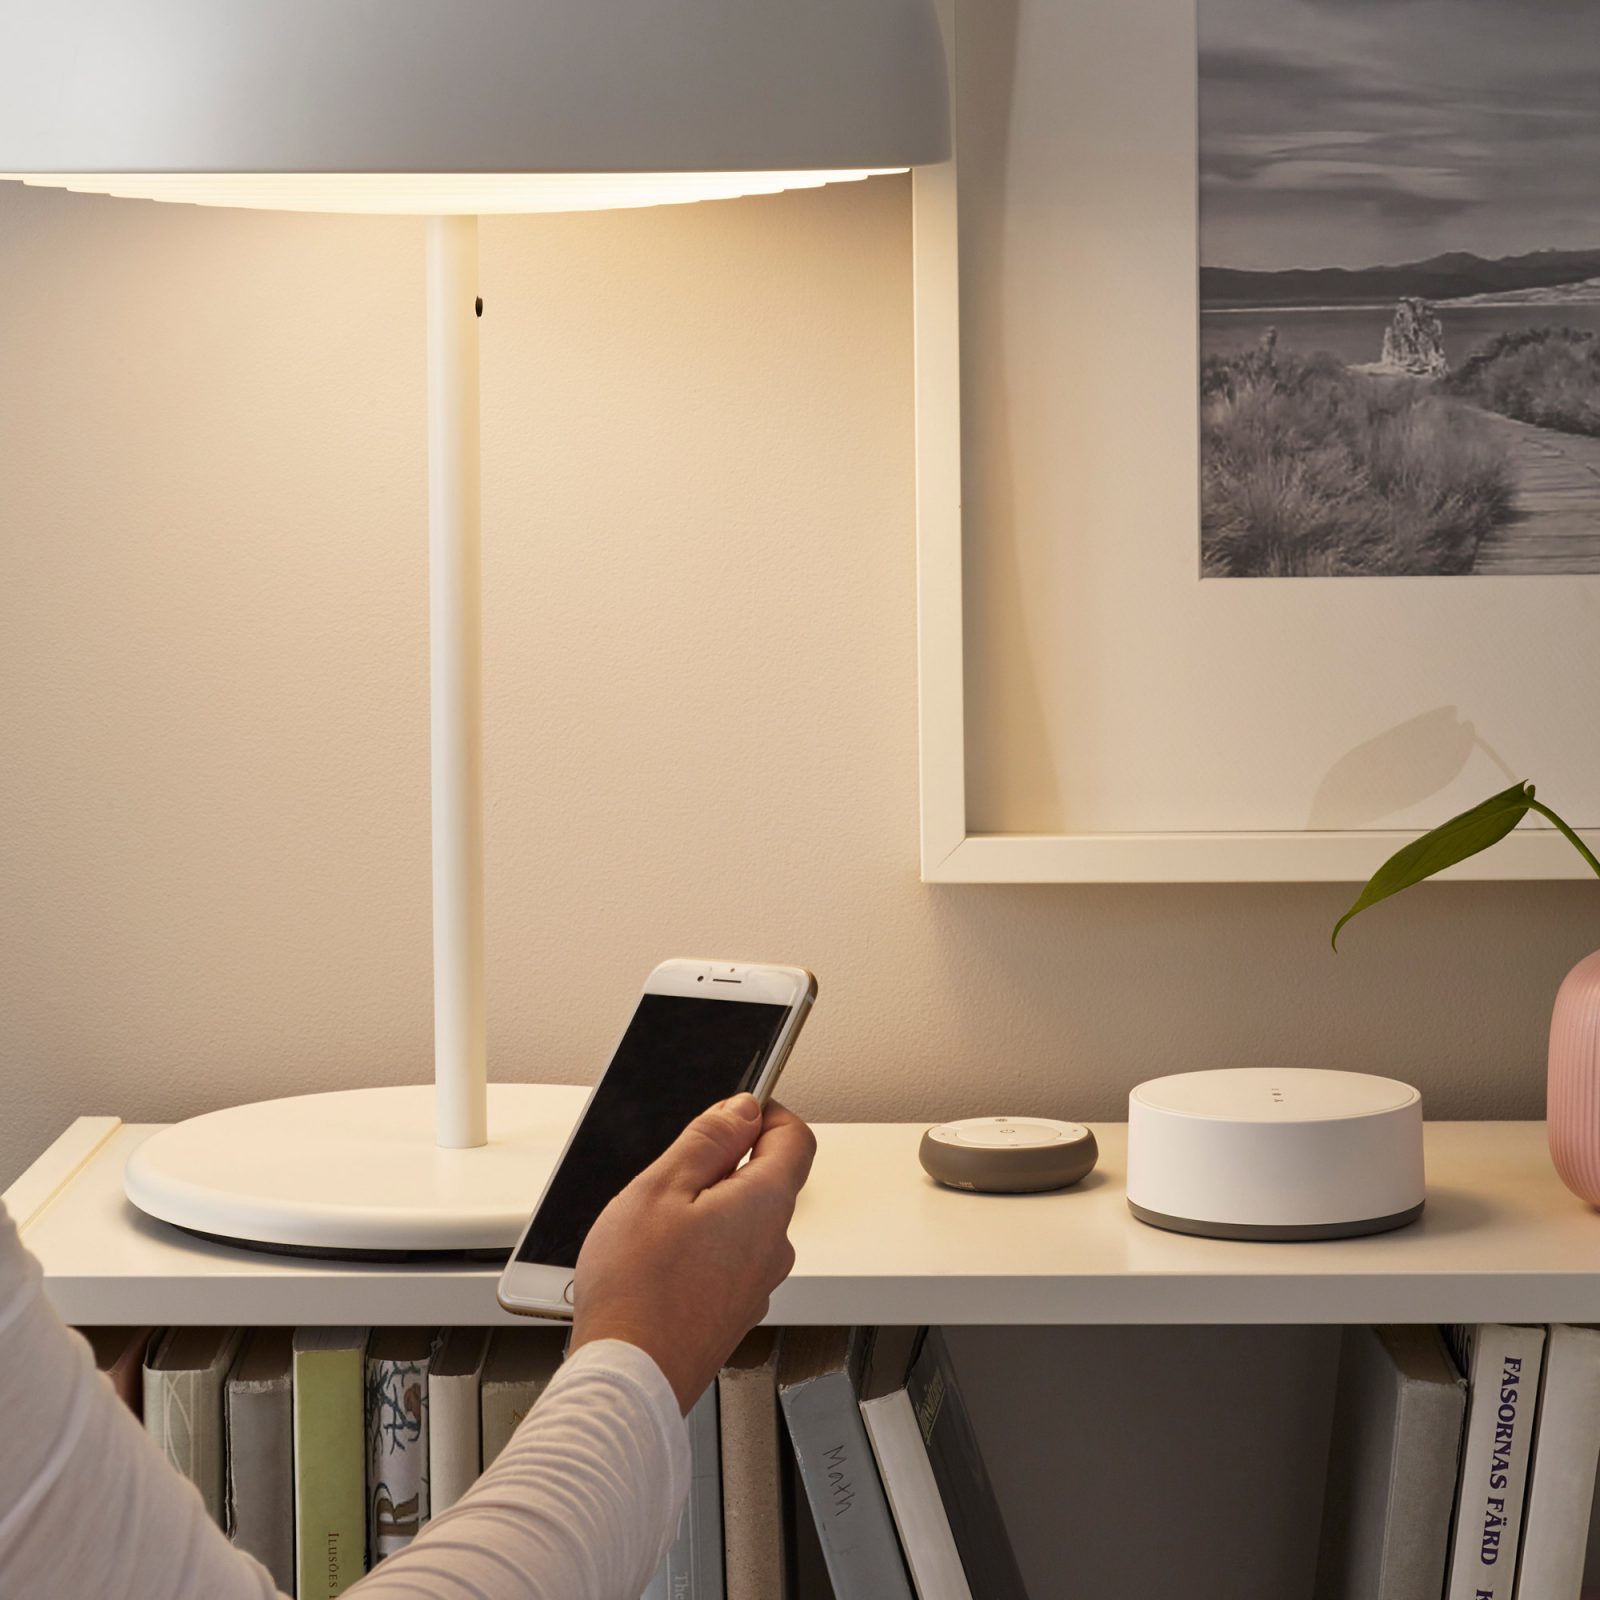 En person håller en smart phone framför en bänk med vit lampa och en liten rund vit wifi-gateway, TRÅDFRI.